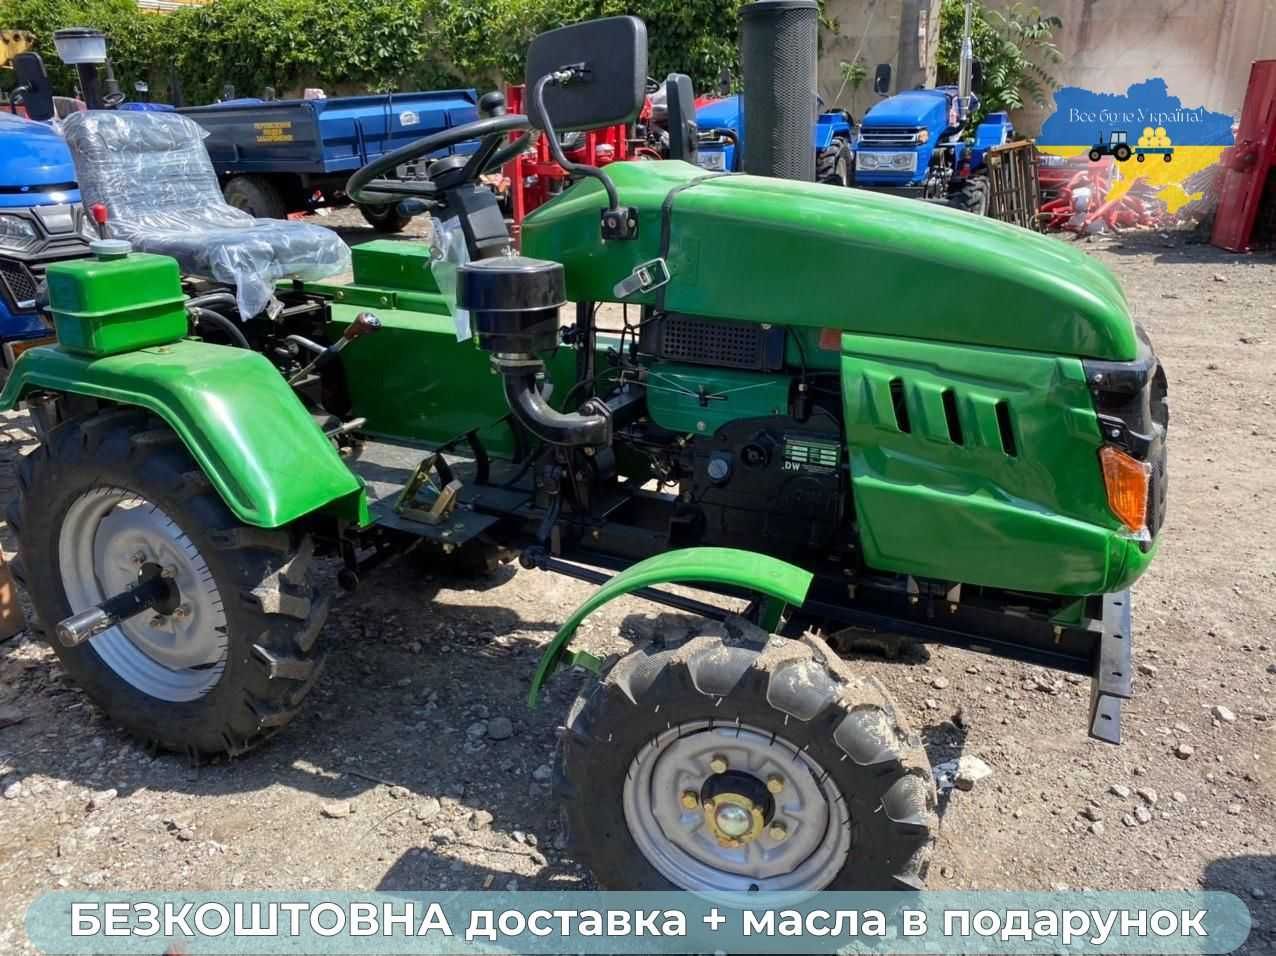 Трактор КЕНТАВР 160 ПРО, ФРЕЗА+ПЛУГ, бесплатная доставка МАСЛА